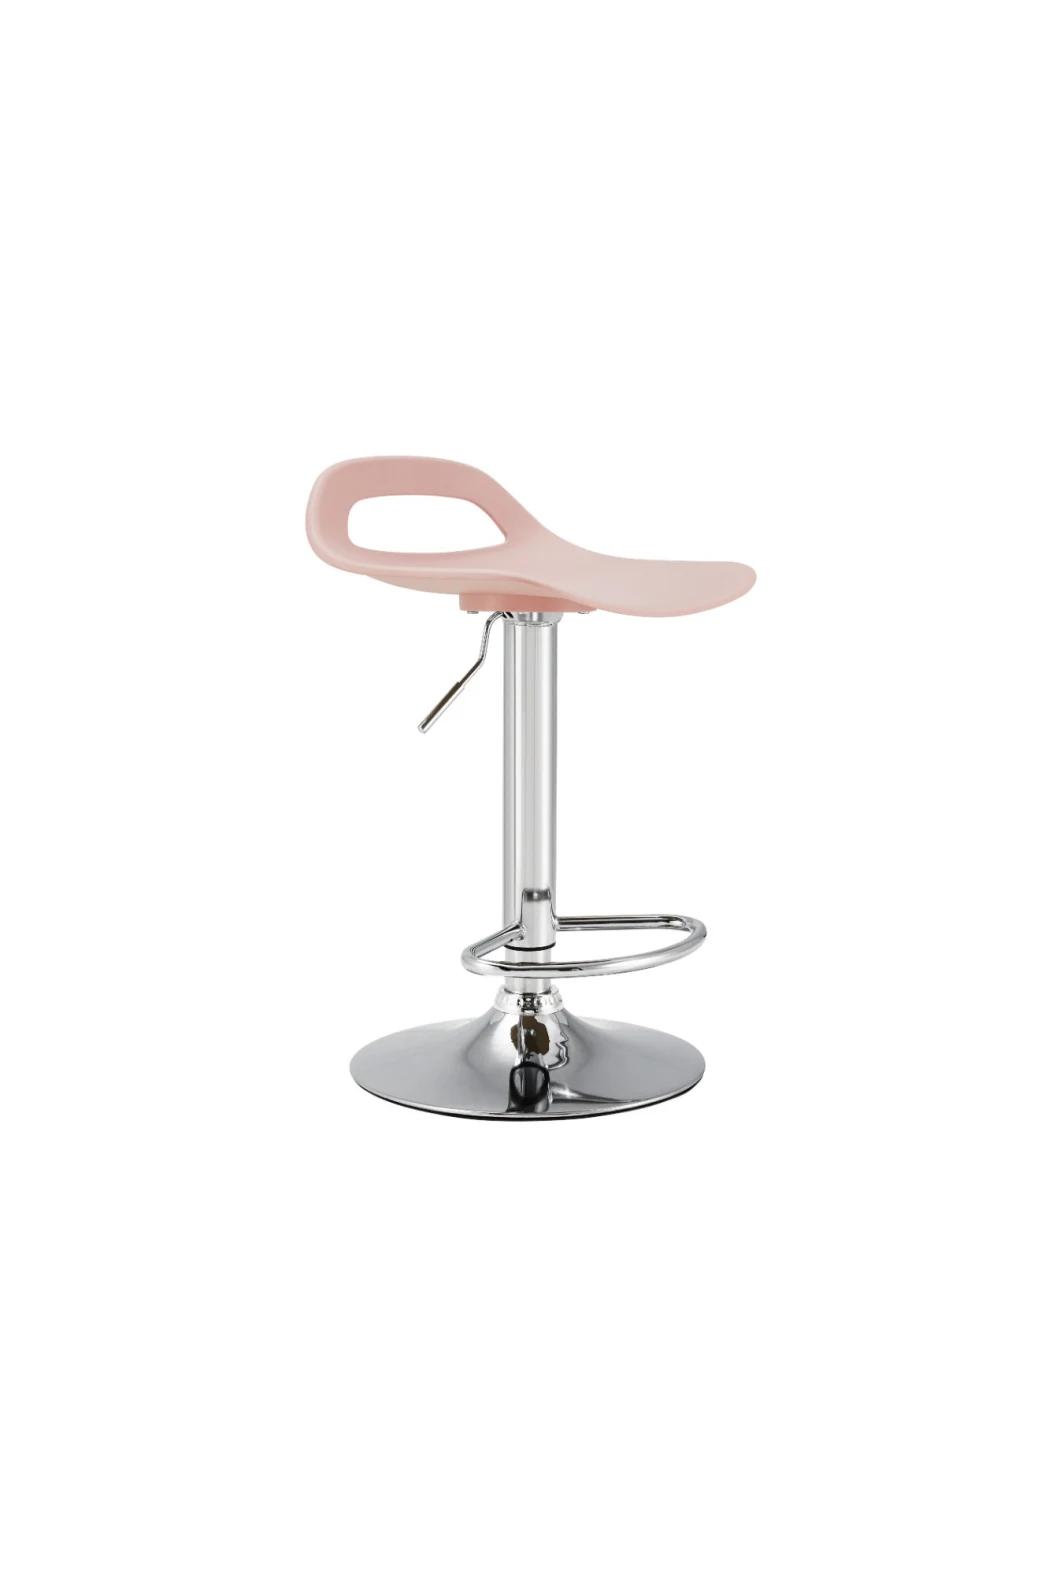 Adjustable Swivel ABS Seat Metal Stool Simple Plastic Bar Stool High Chair Bar Modern Kitchen Counter Top Bar Chair